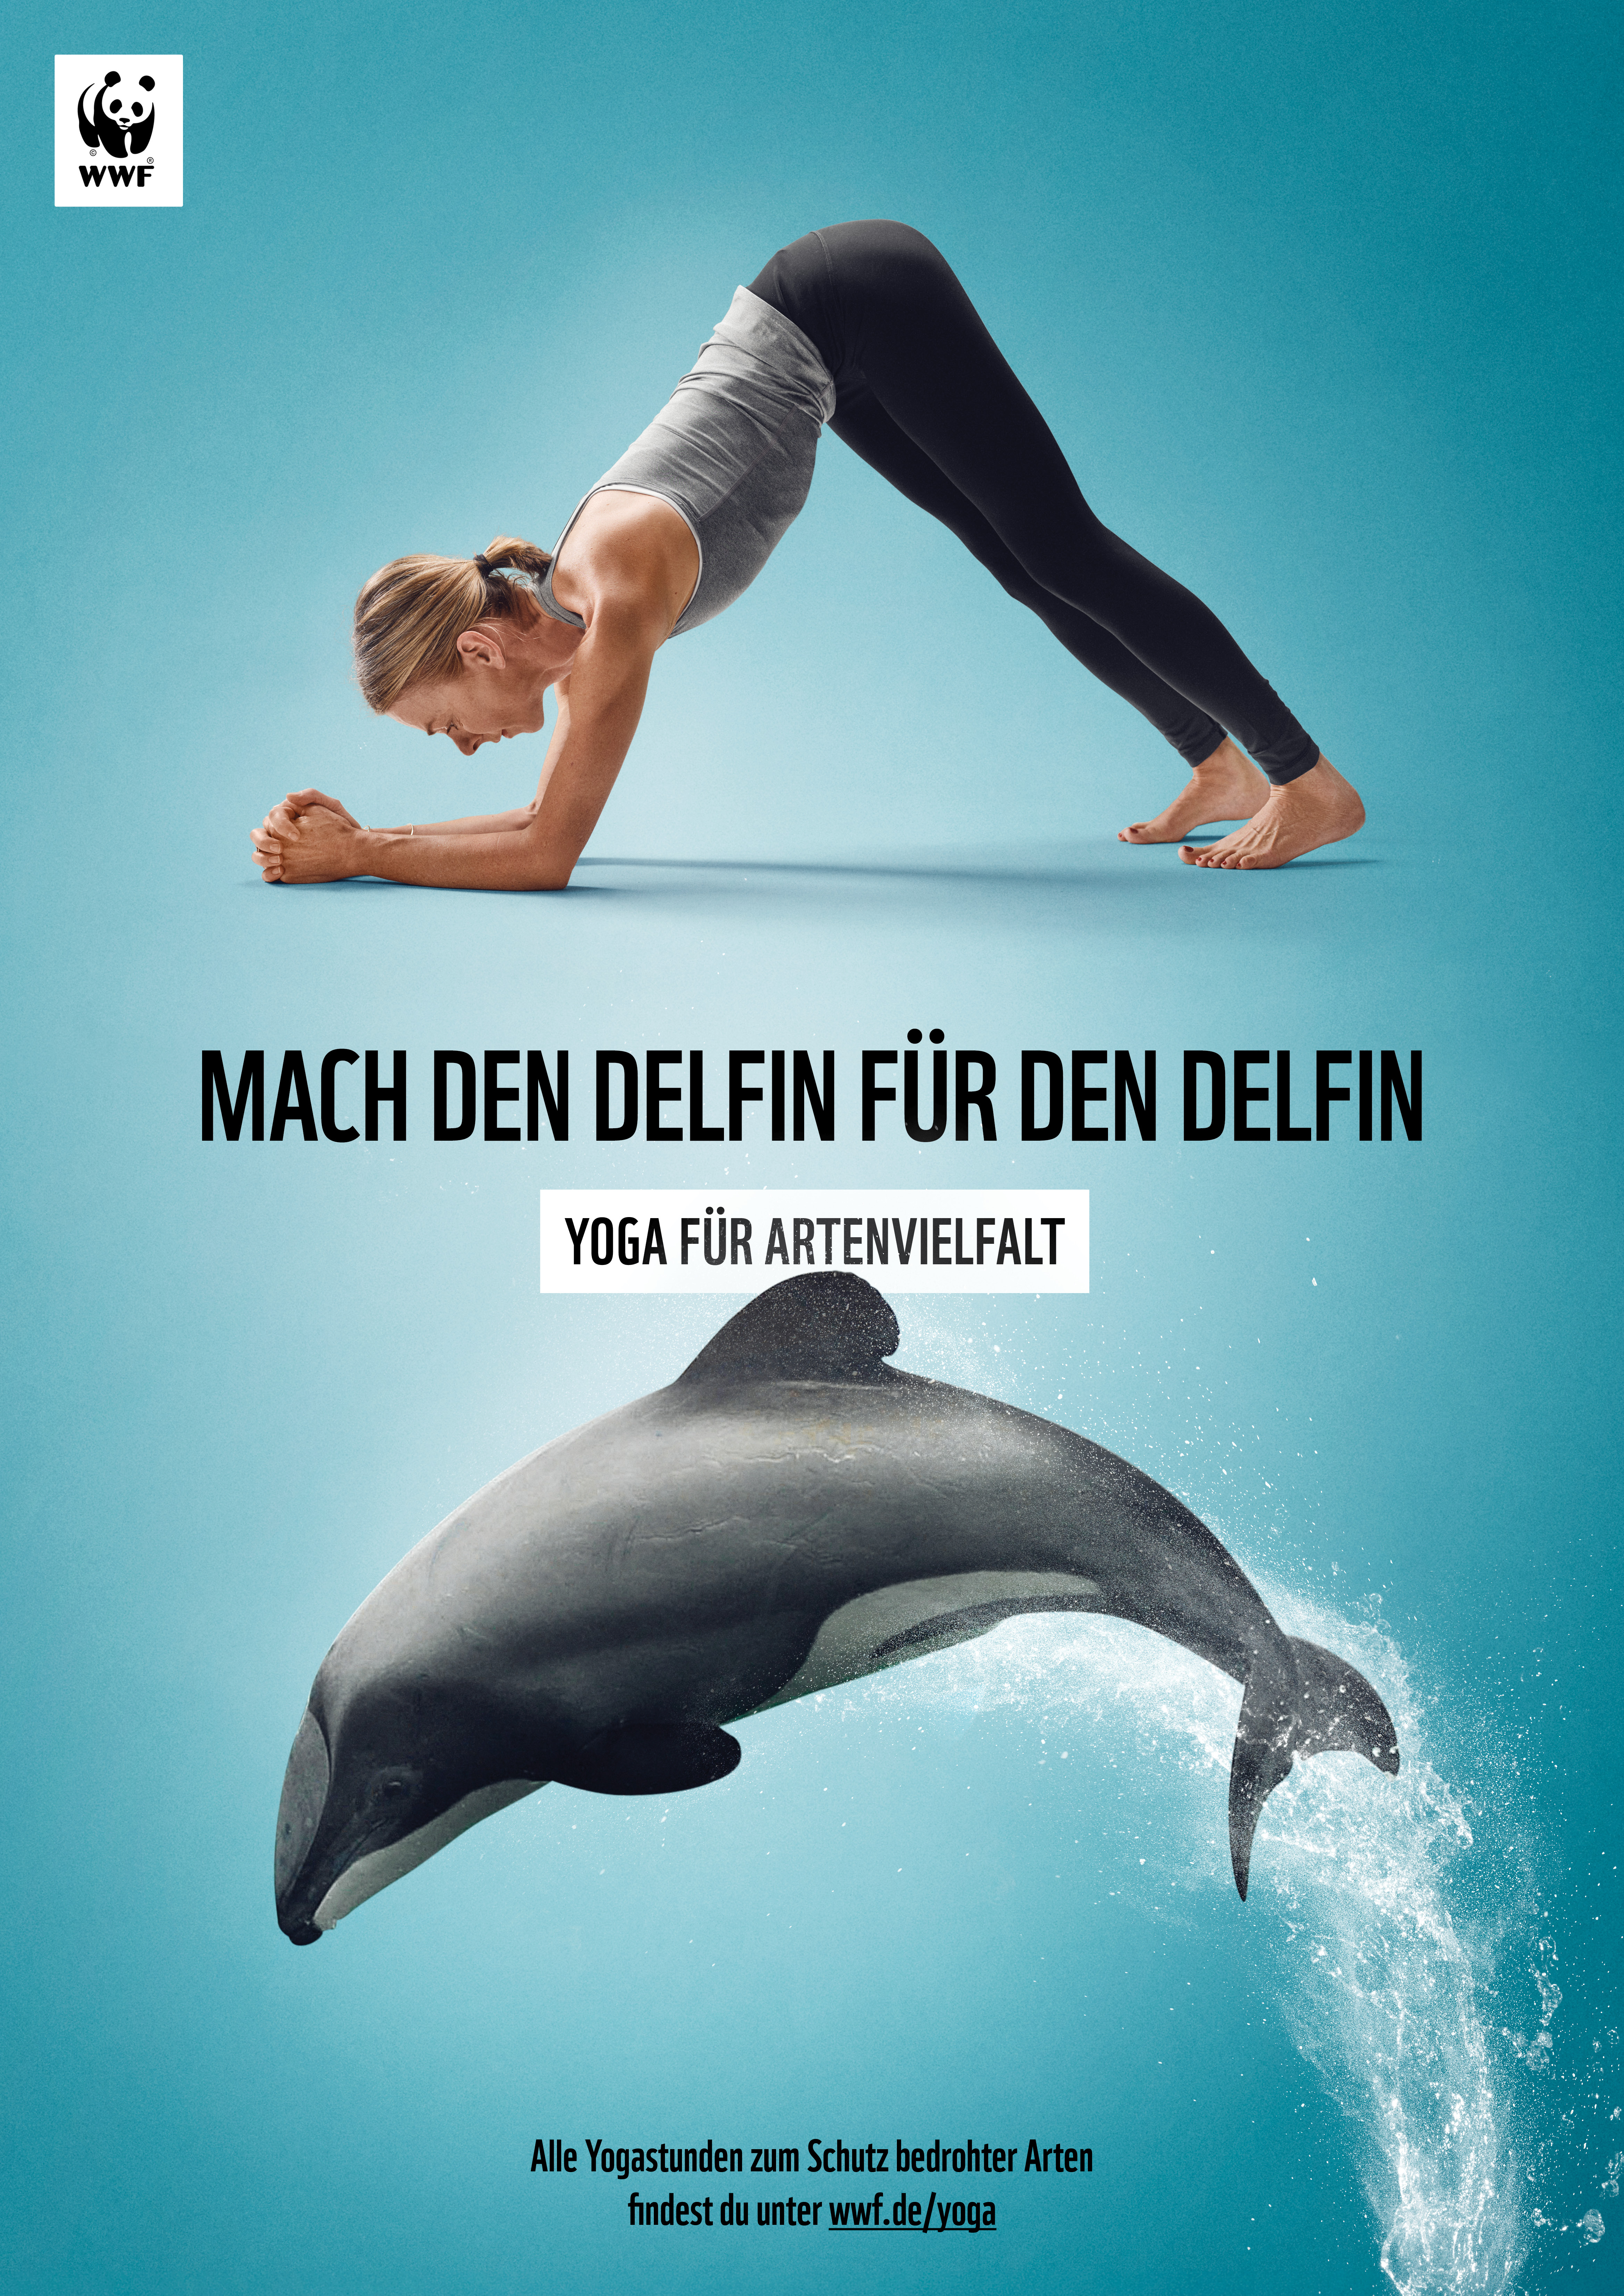 WWF Yoga für Artenvielfalt Maui Delfin